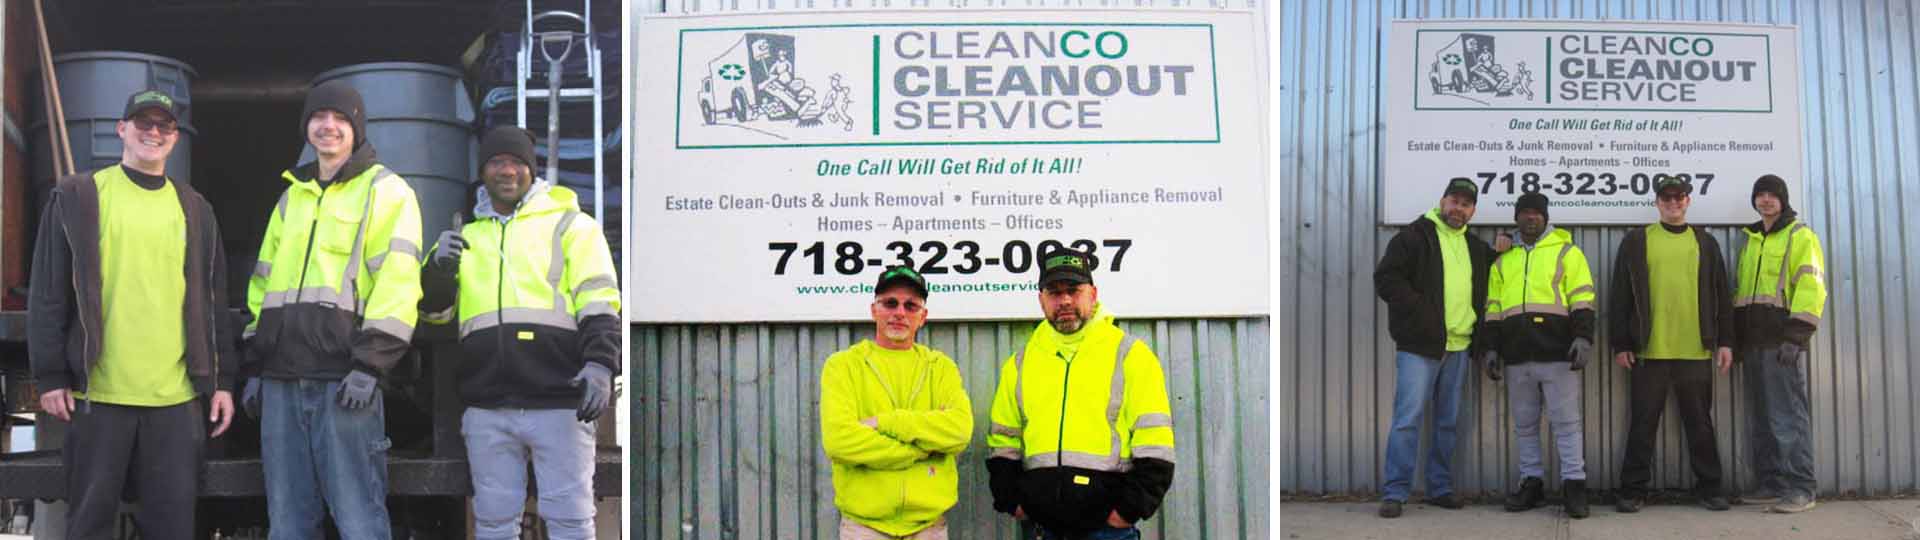 Cleanco Cleanout Services